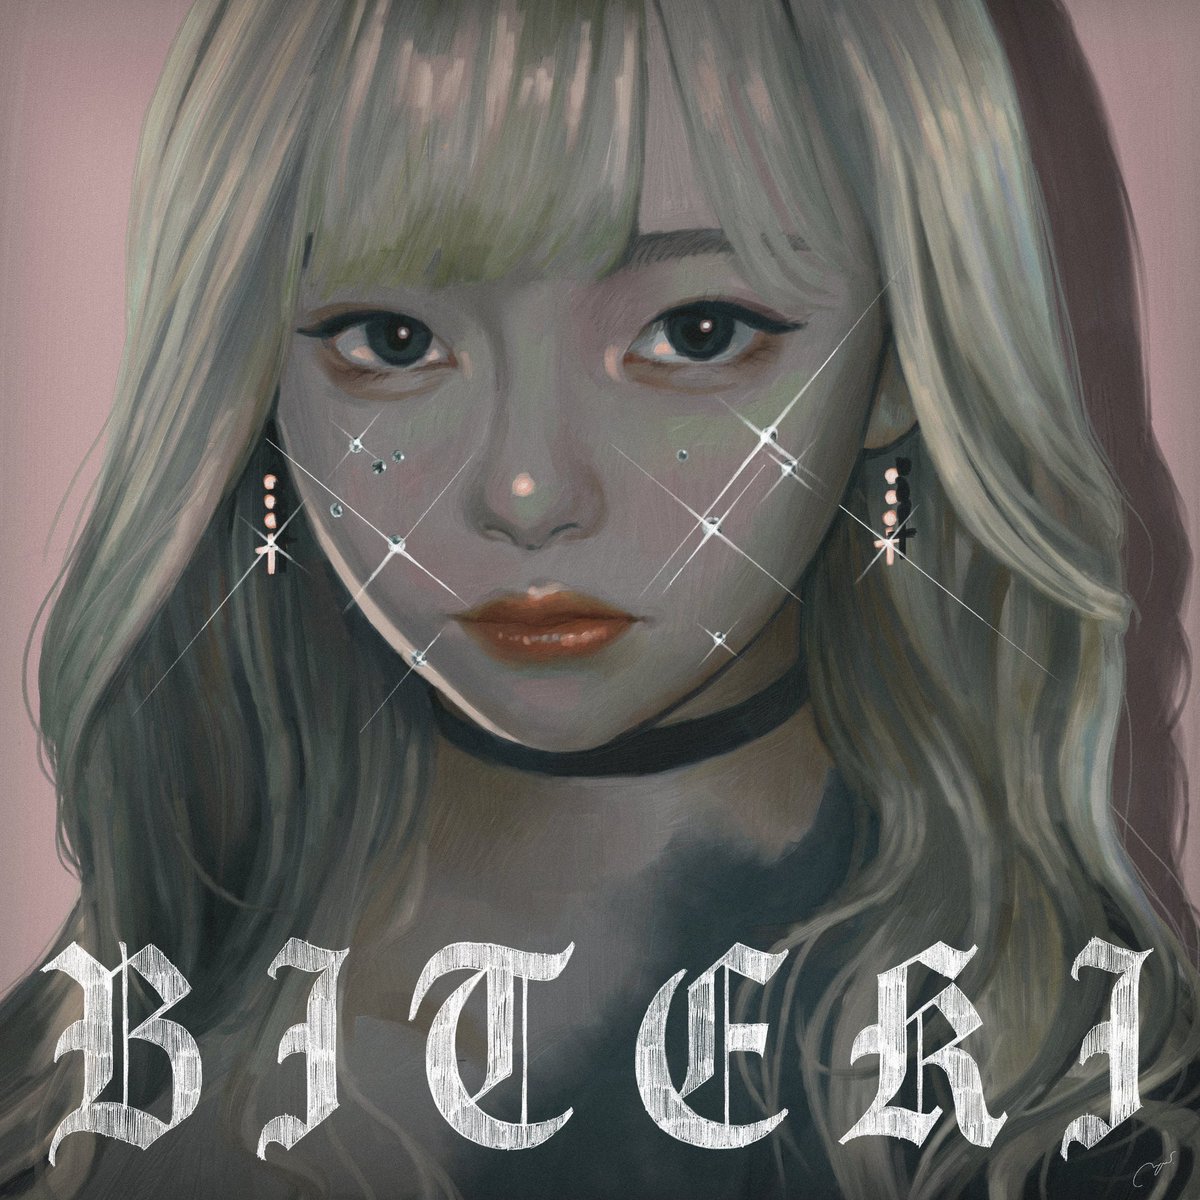 Cover art for『Biteki Keikaku - マウントゲーム feat.青空&絲花』from the release『BITEKI